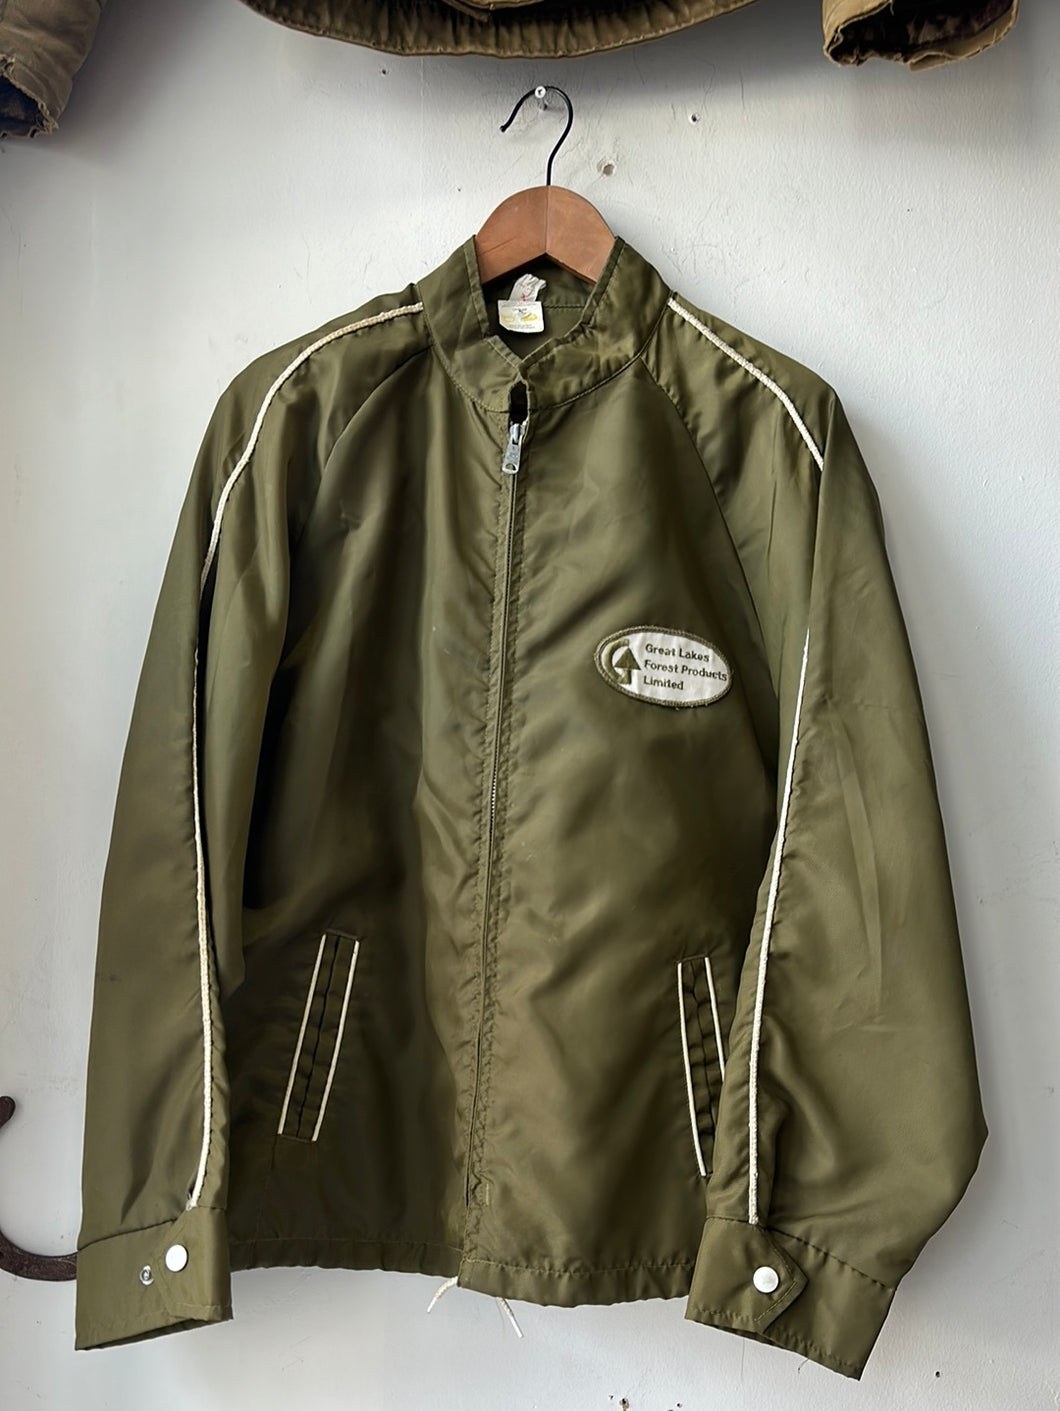 1970s/'80s Nylon Jacket